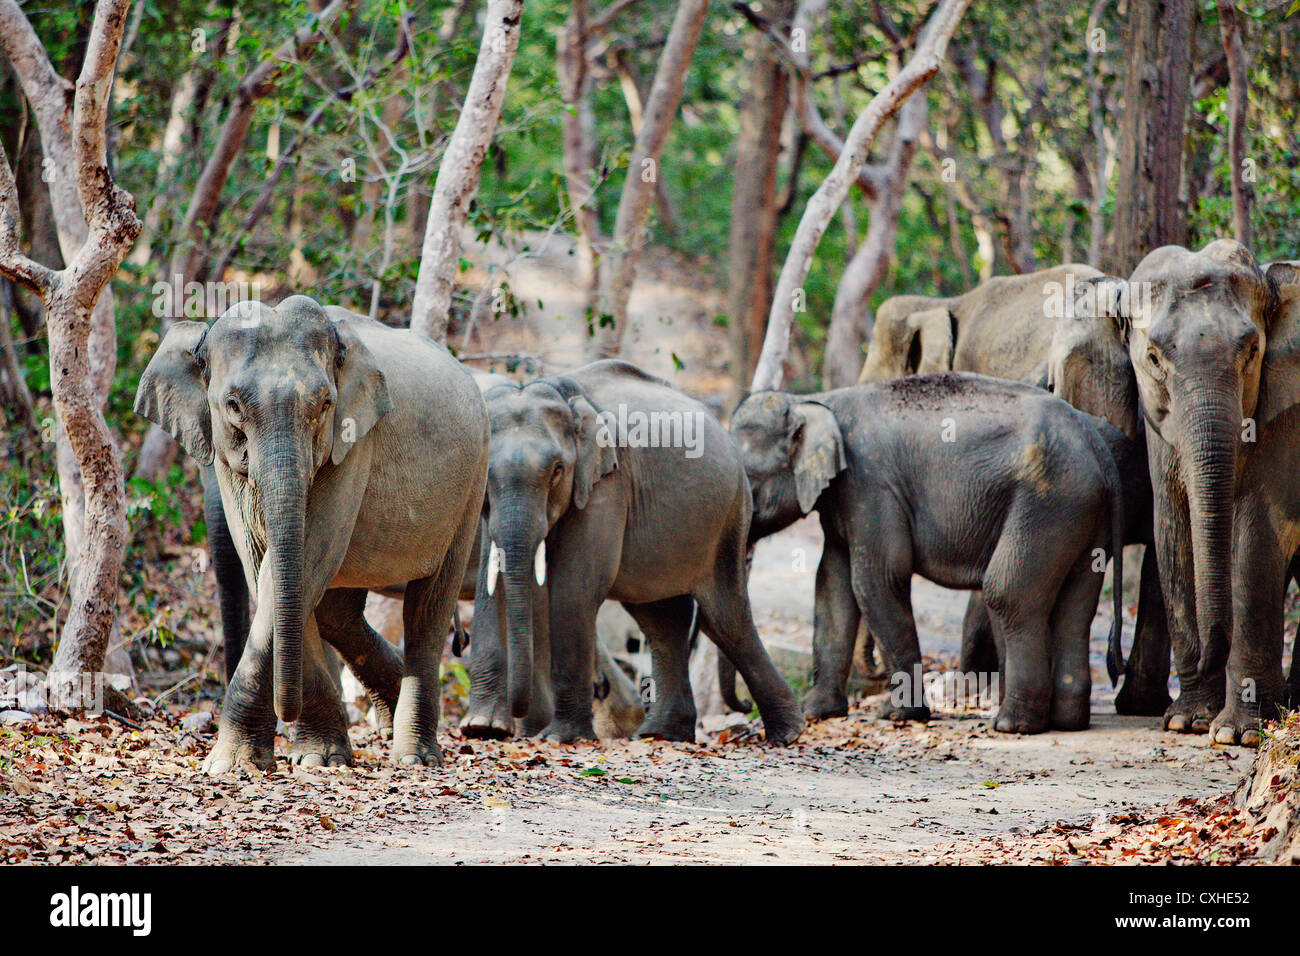 Wild elephants on road in Bijrani area in Jim Corbett Tiger Reserve, India. Stock Photo